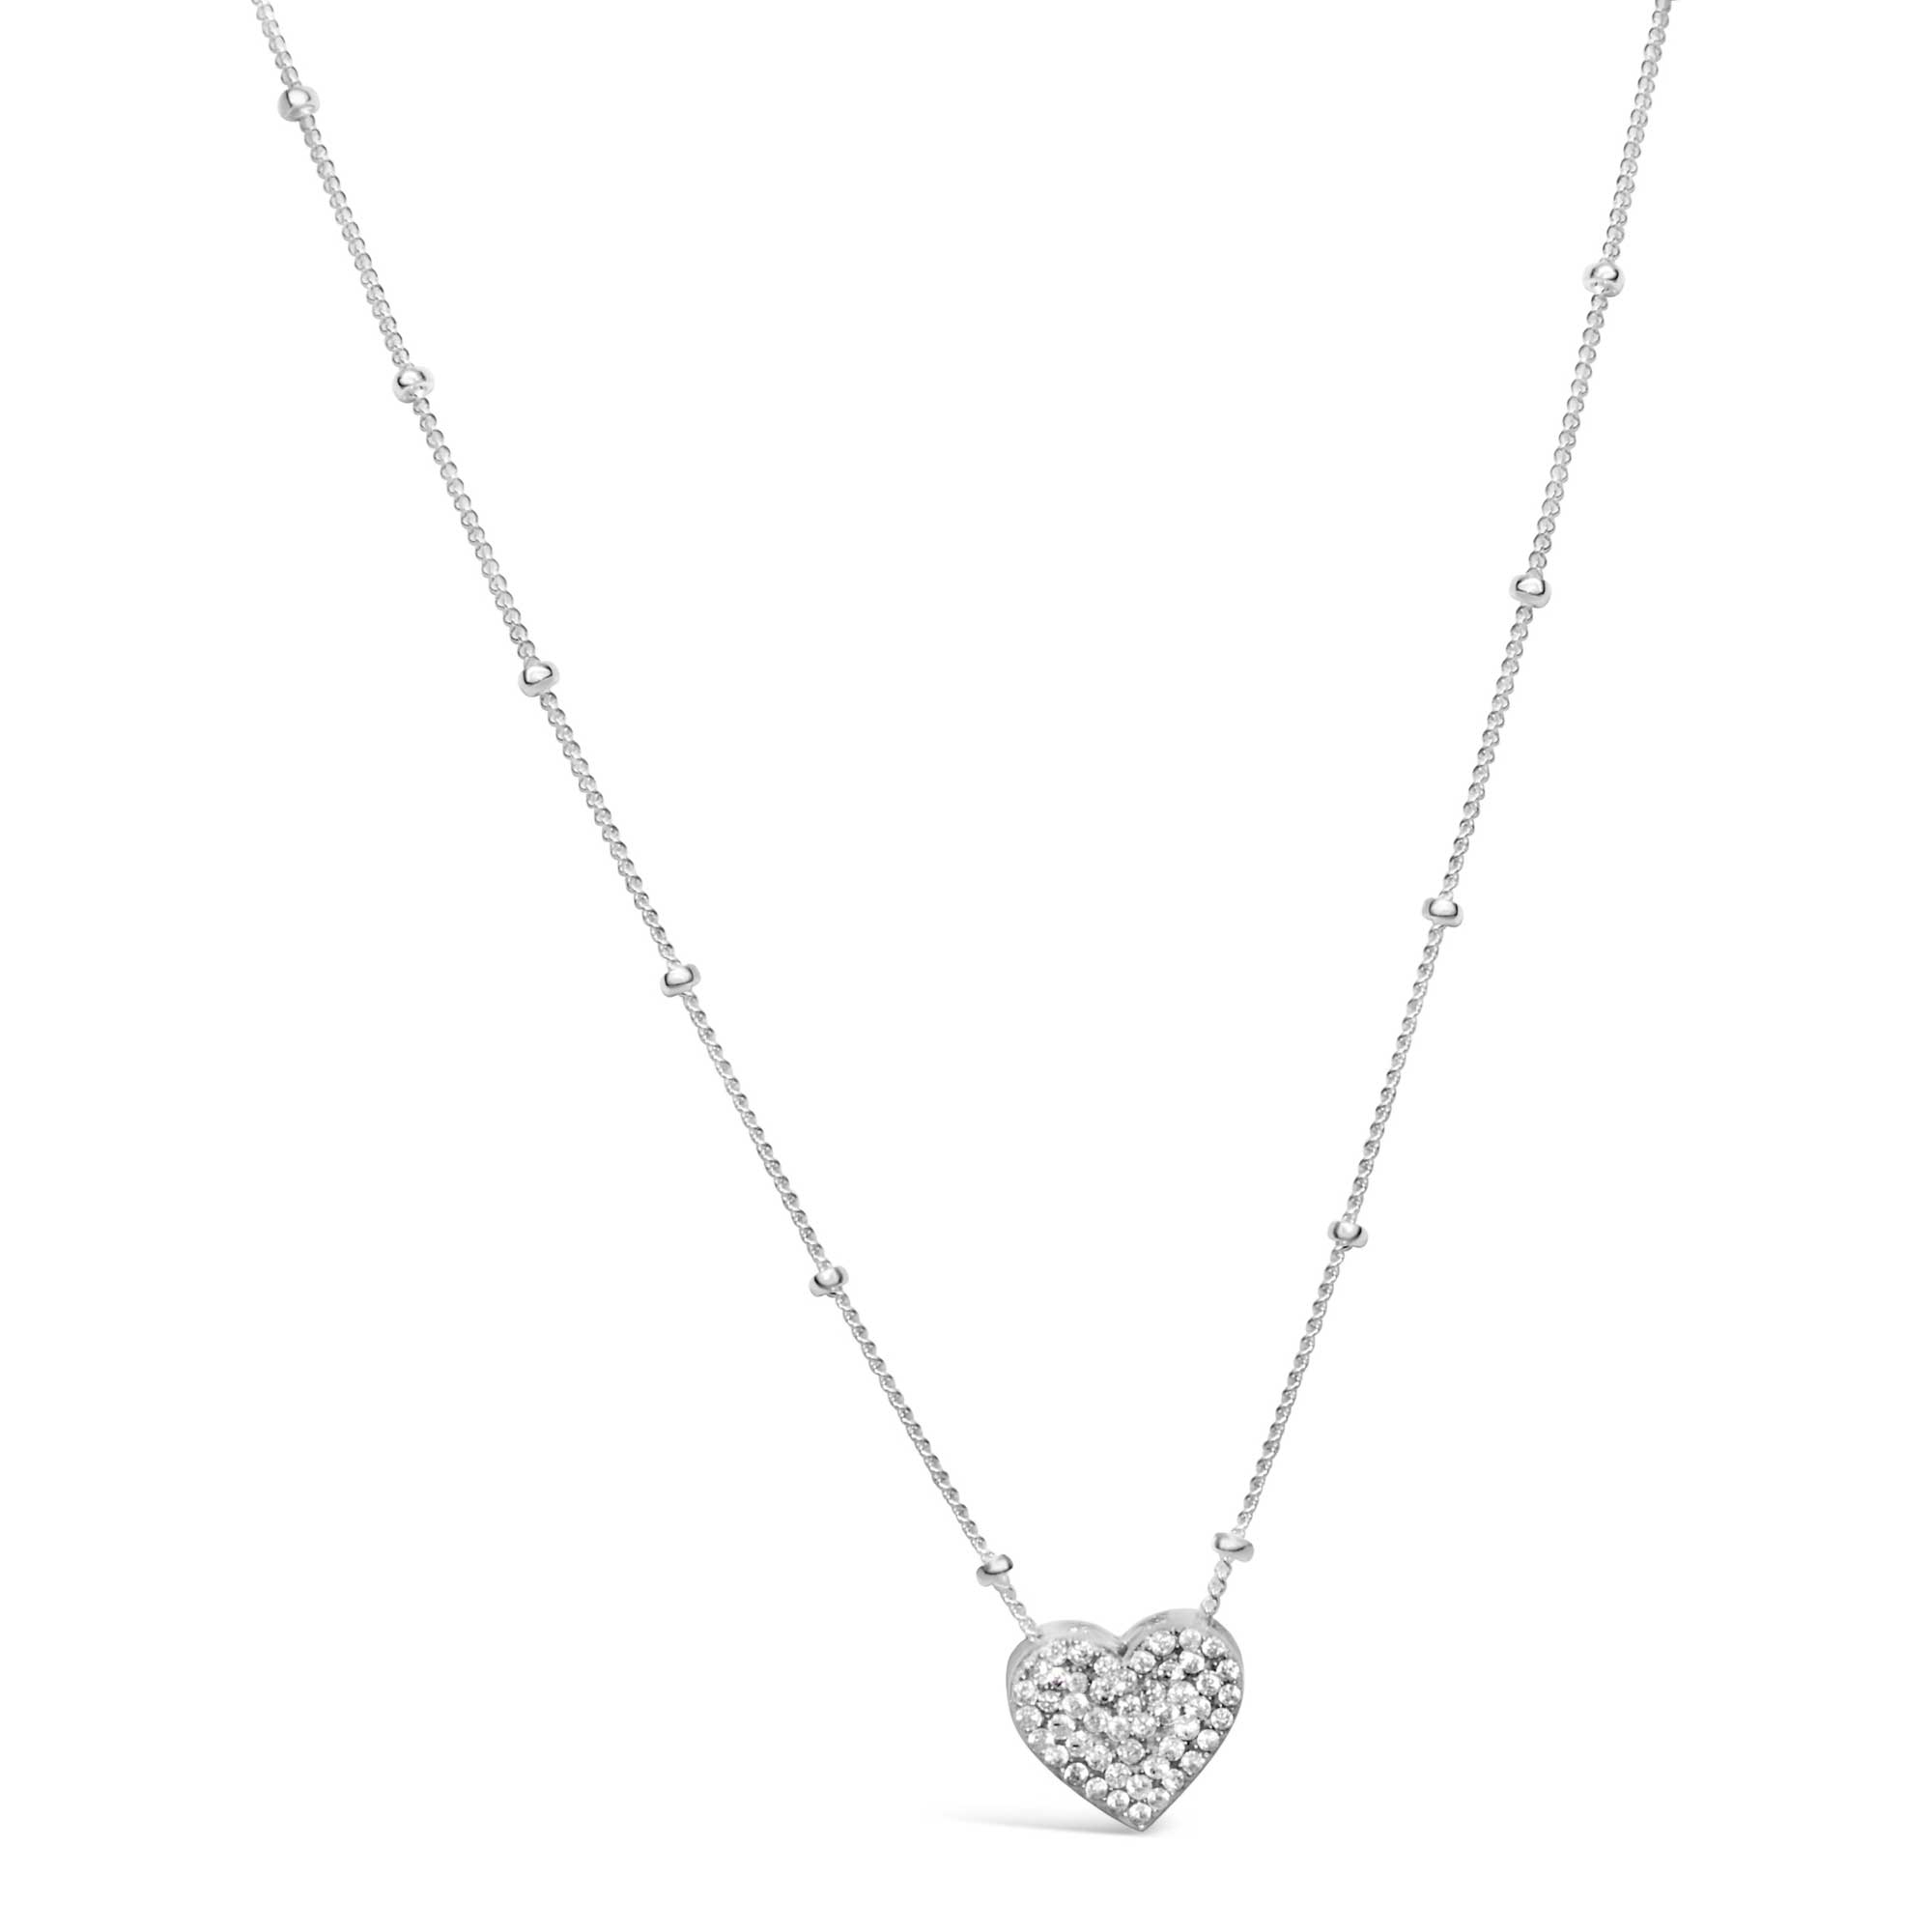 Stia Charm & Chain Necklace - Pavé Heart: Precious Accents, Ltd.